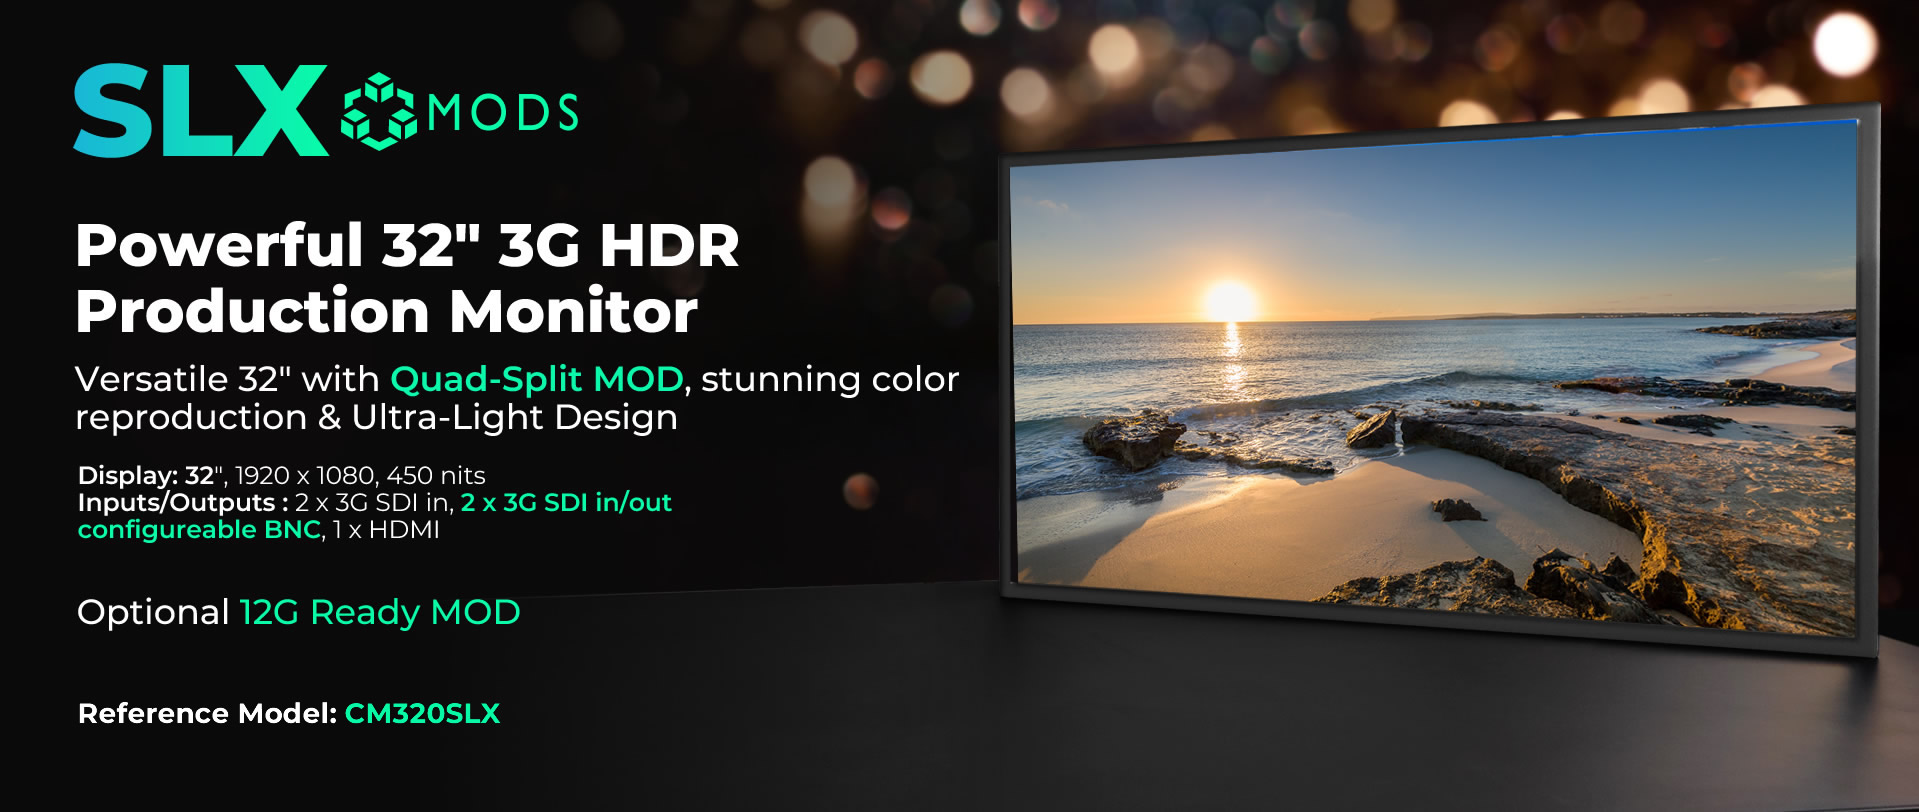 Professional 12G LCD Monitors Full HD 18